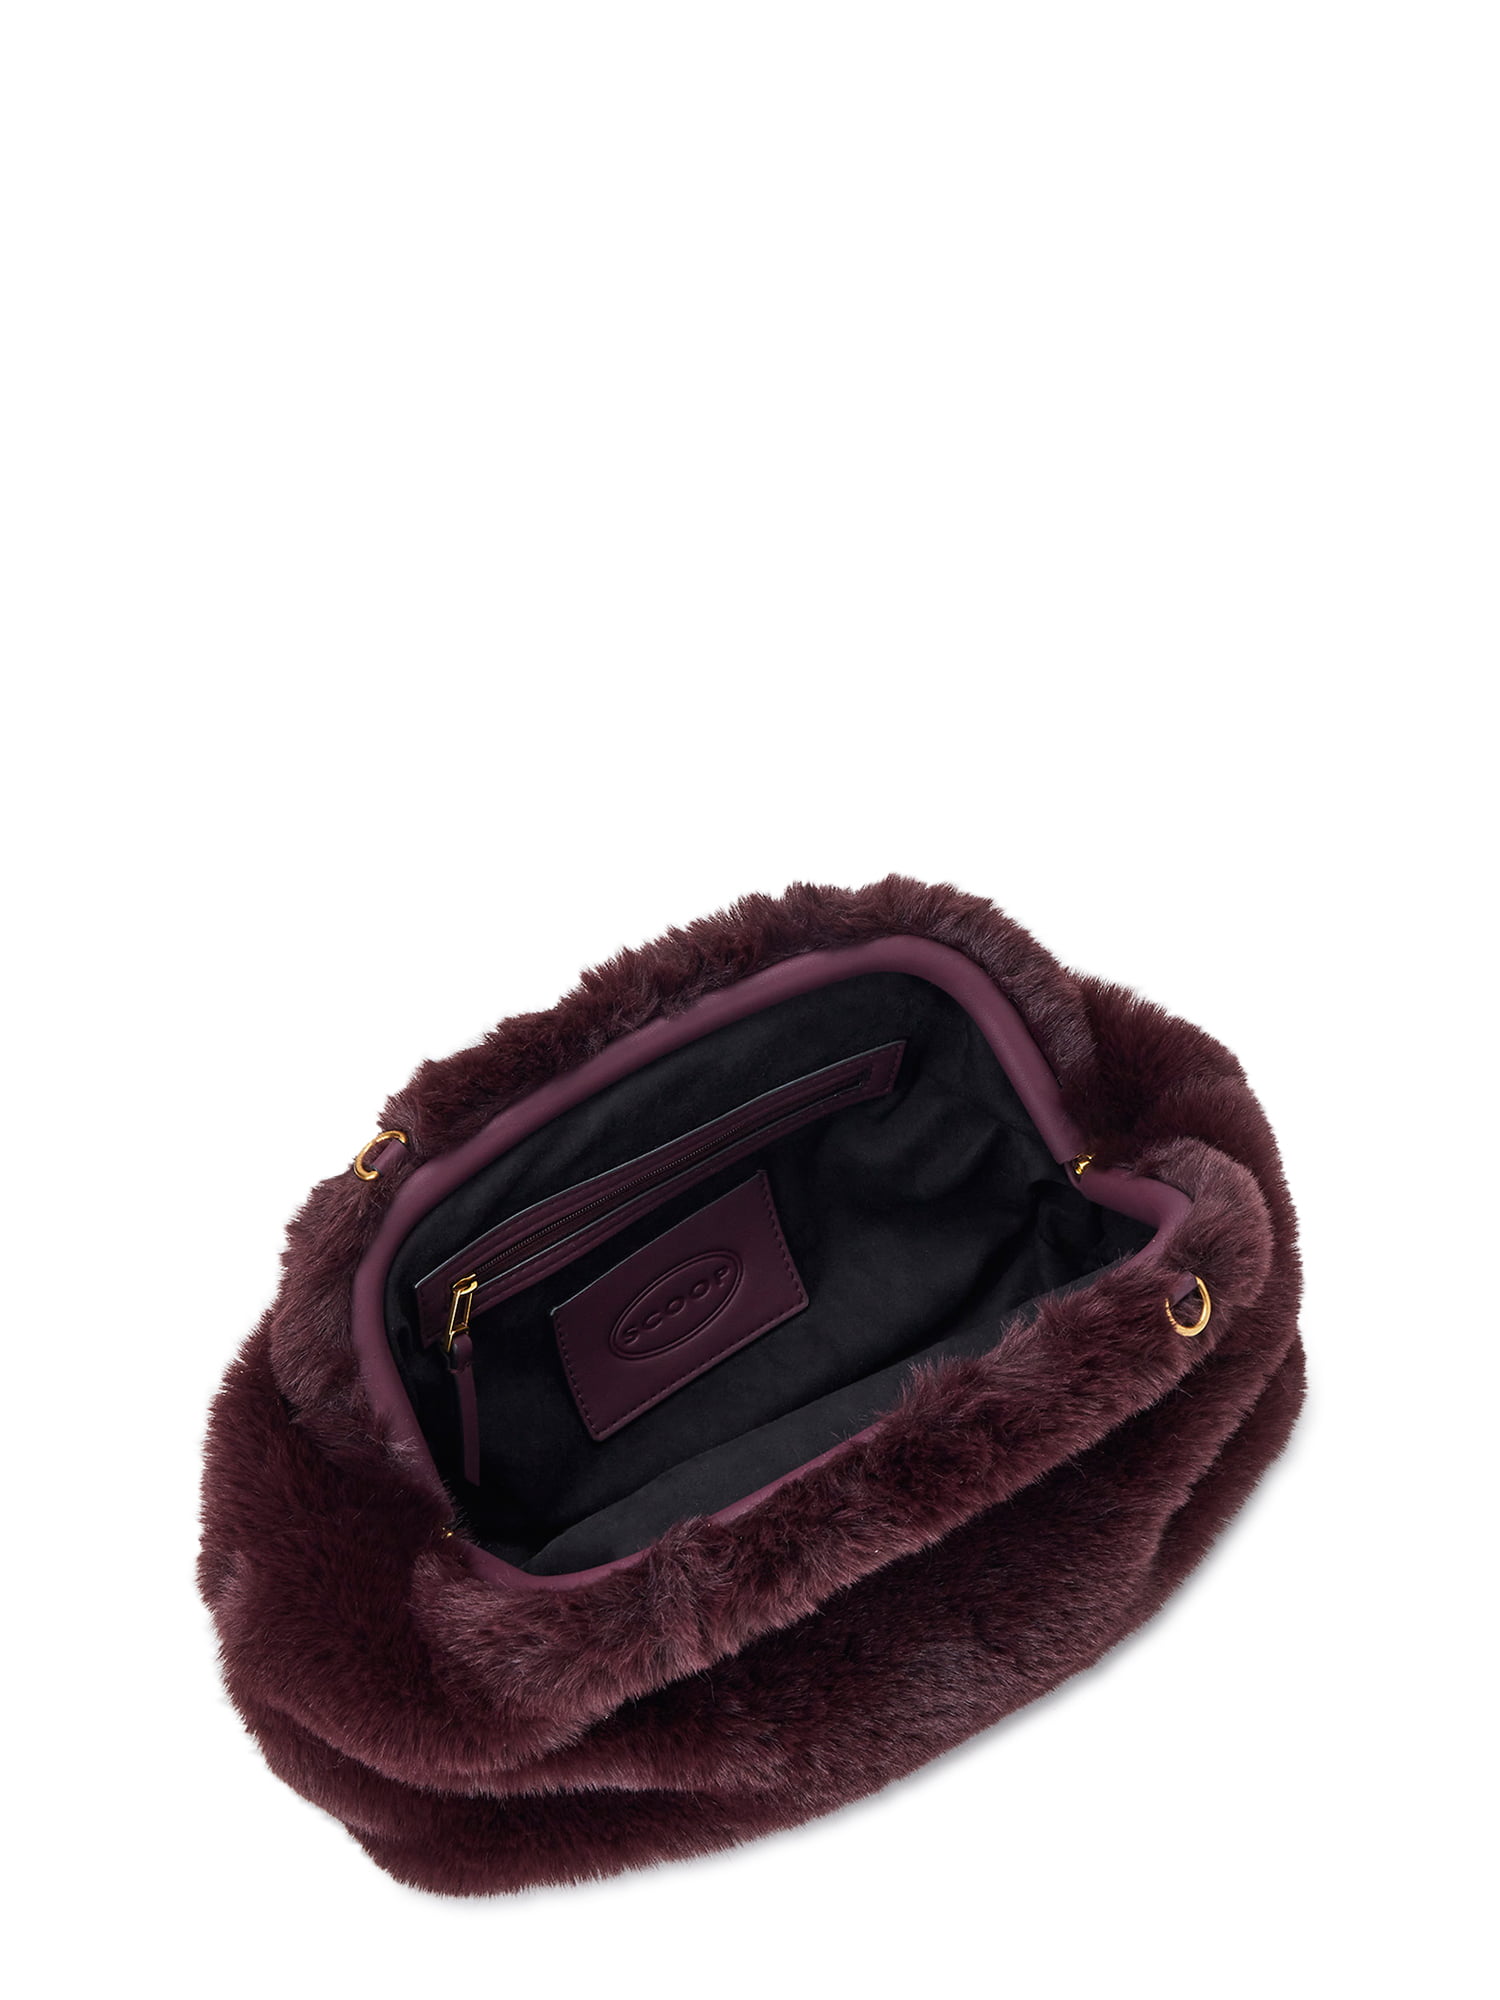 Scoop Women's Faux Fur Clutch with Chain Handle, Purple 